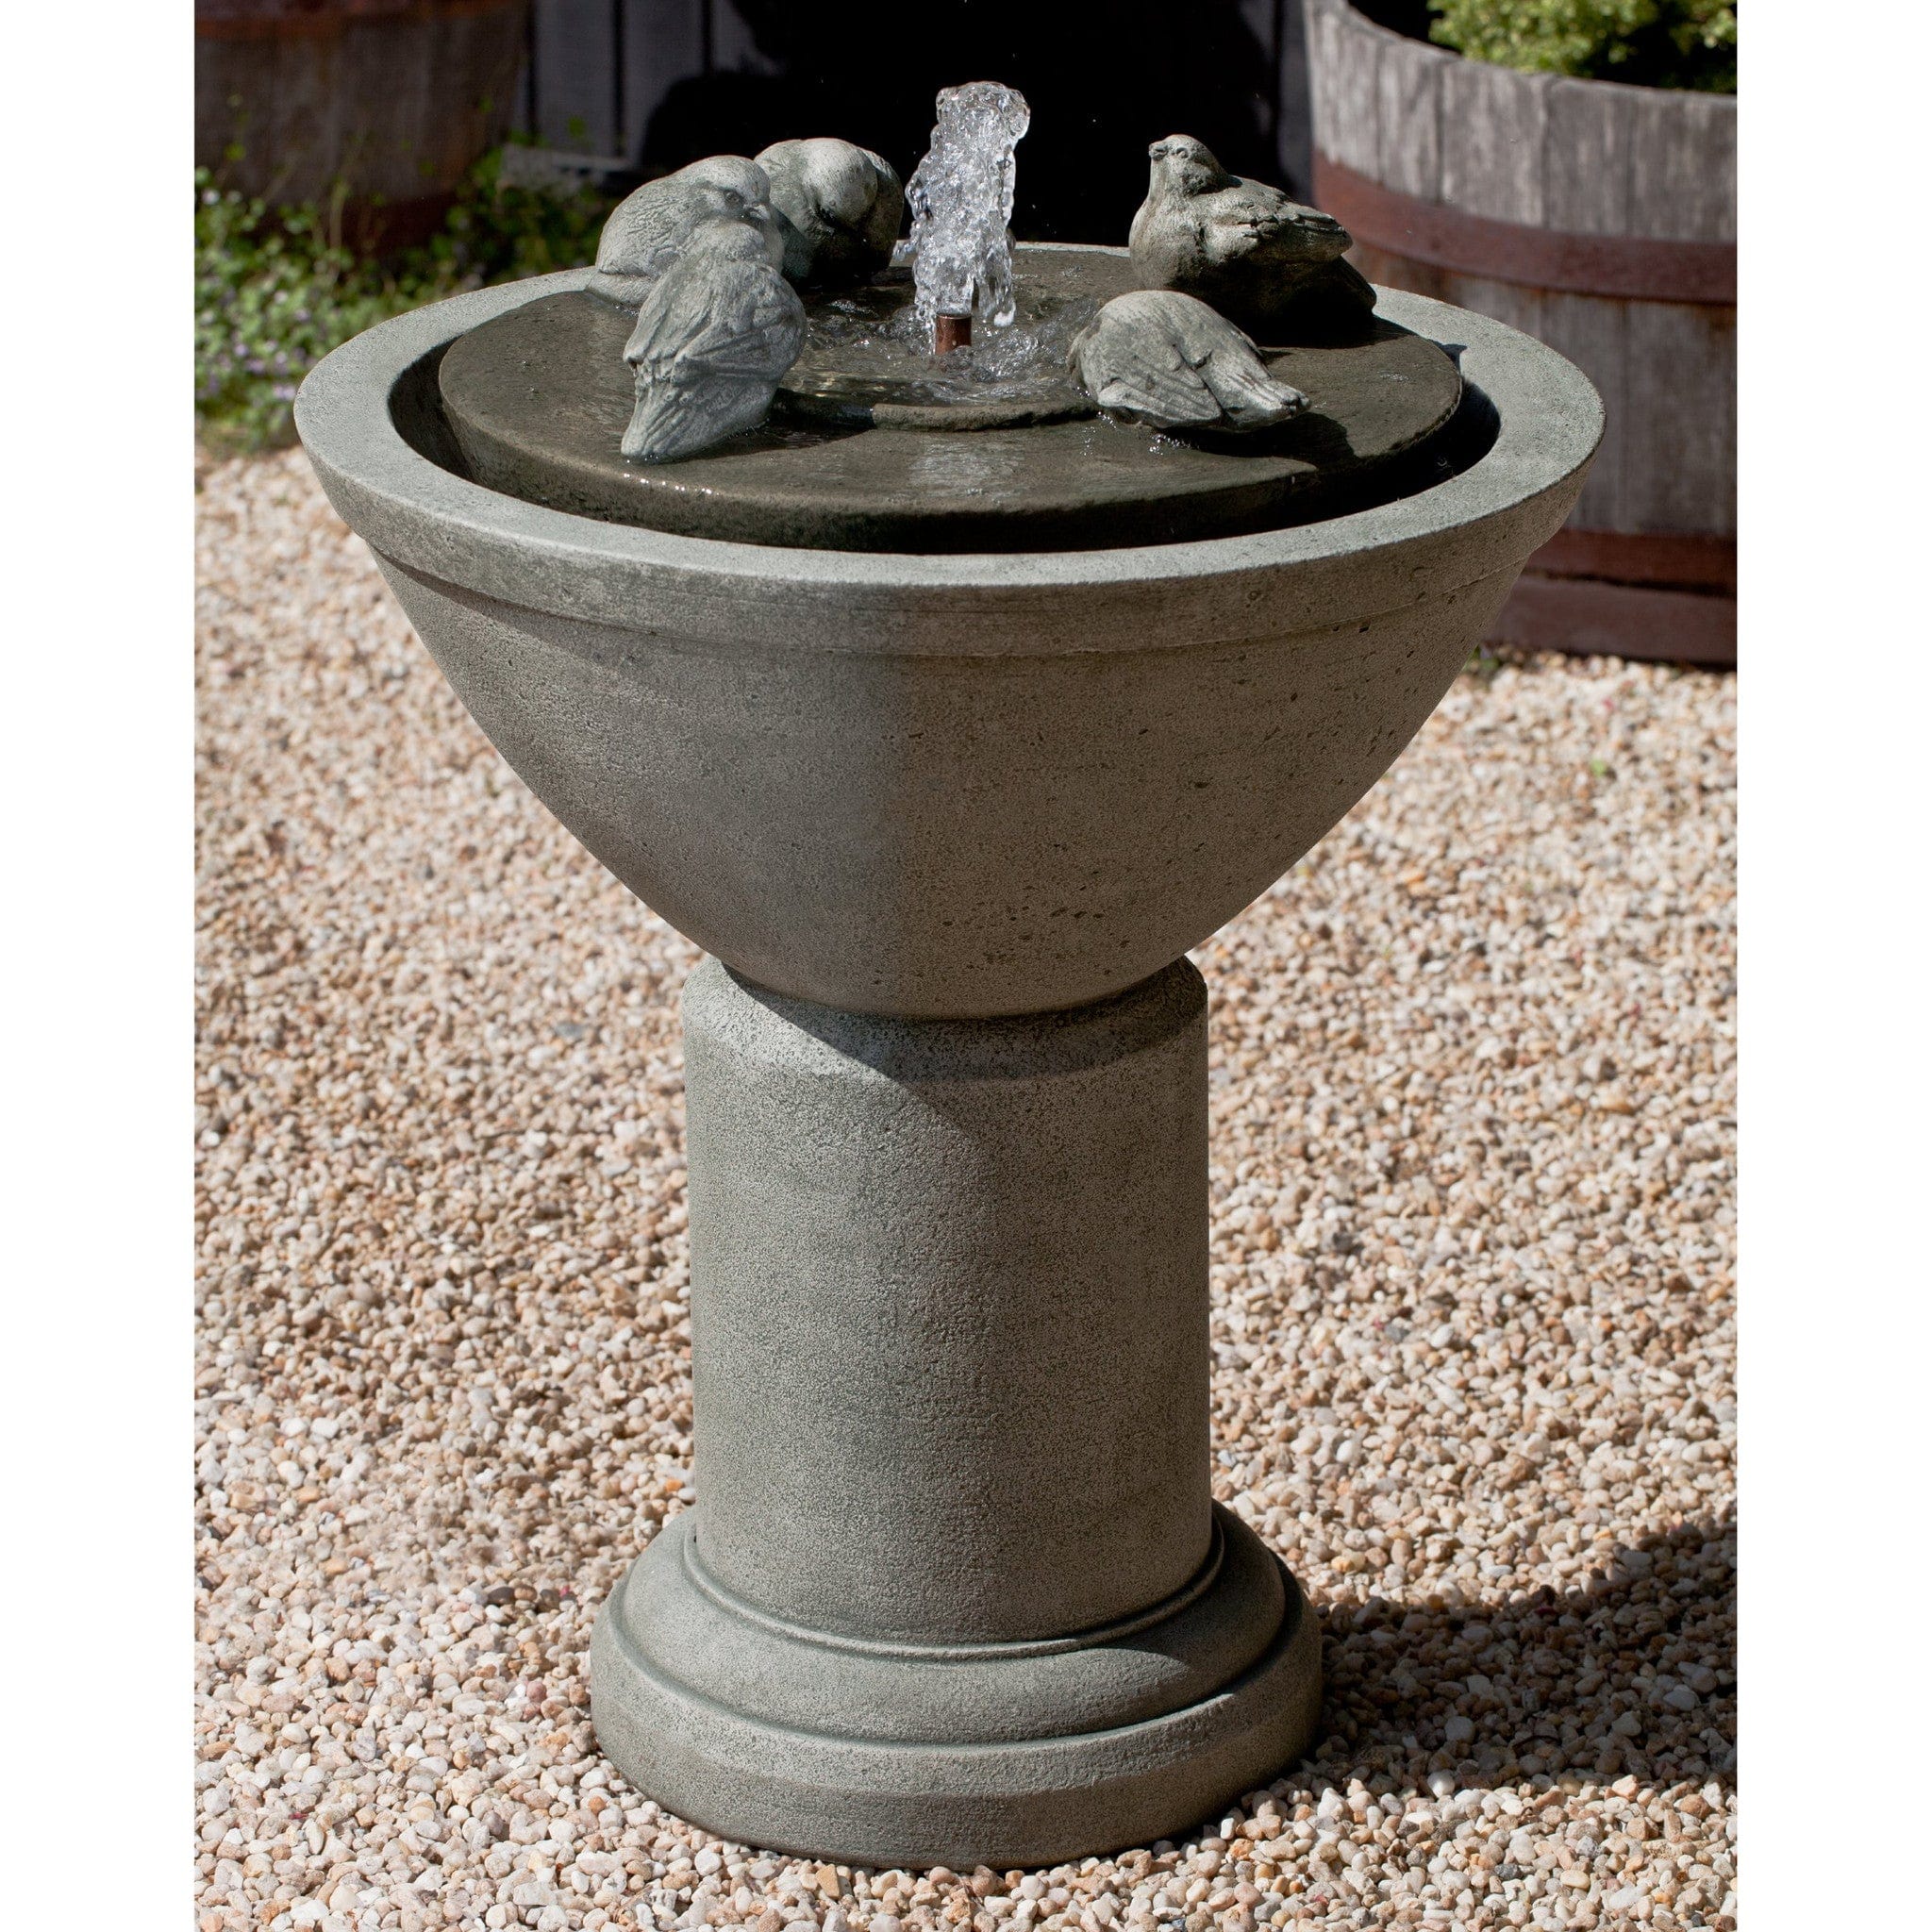 Passaros II Garden Water Fountain - Outdoor Art Pros